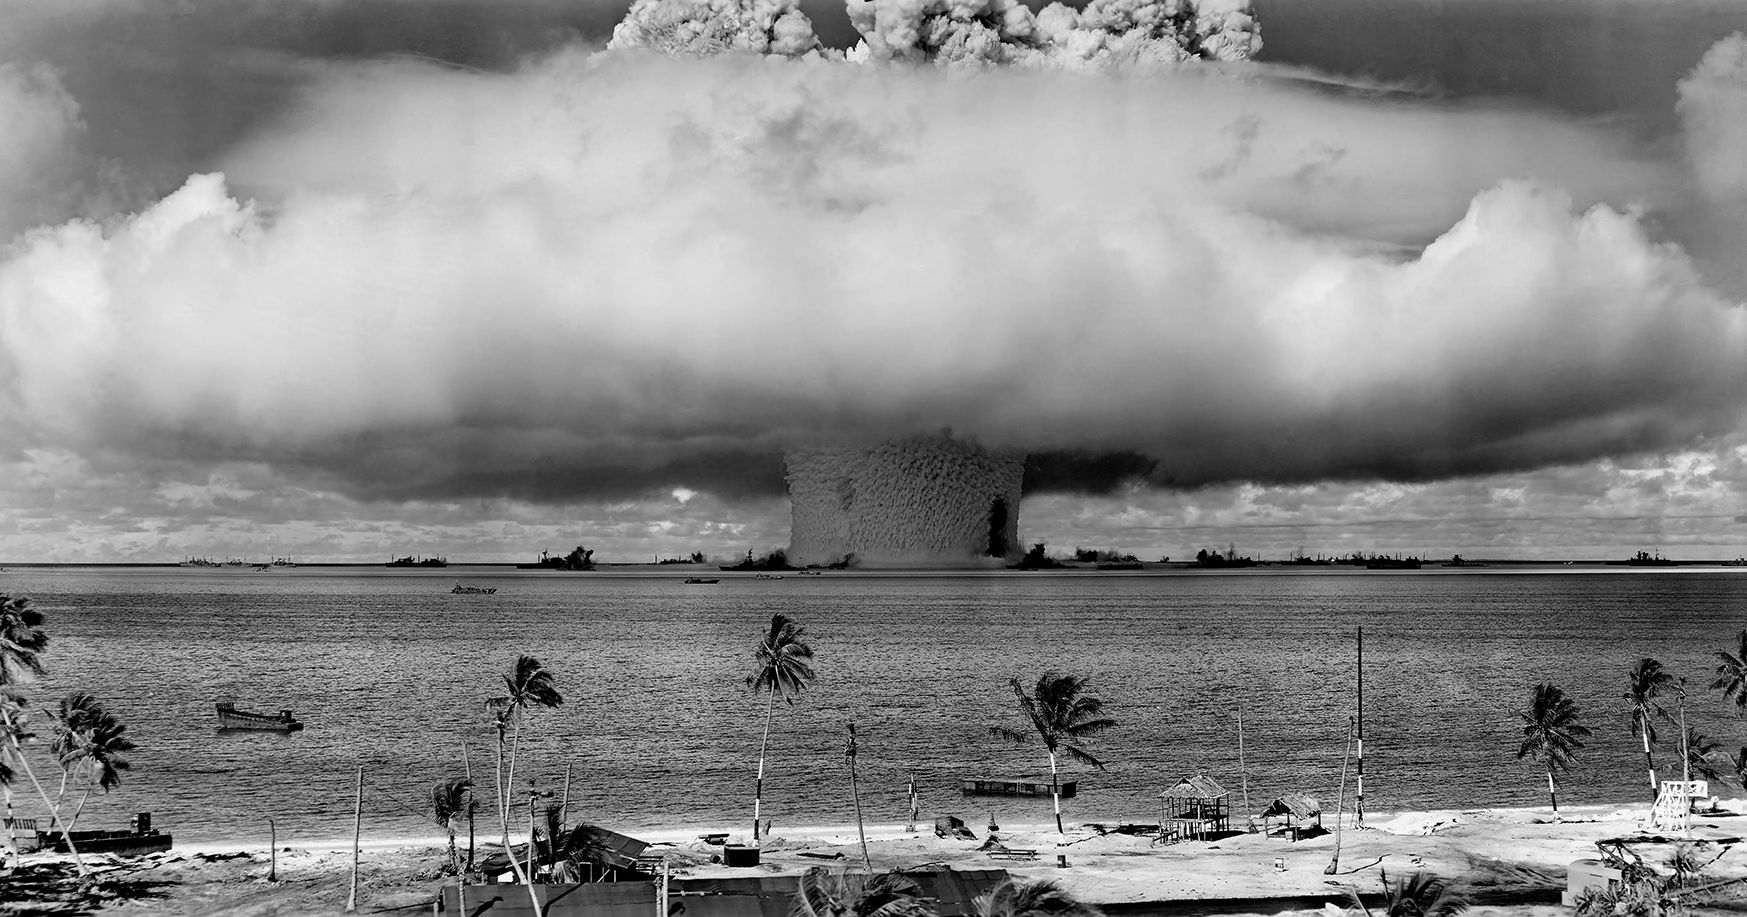 Atom bomb explosion